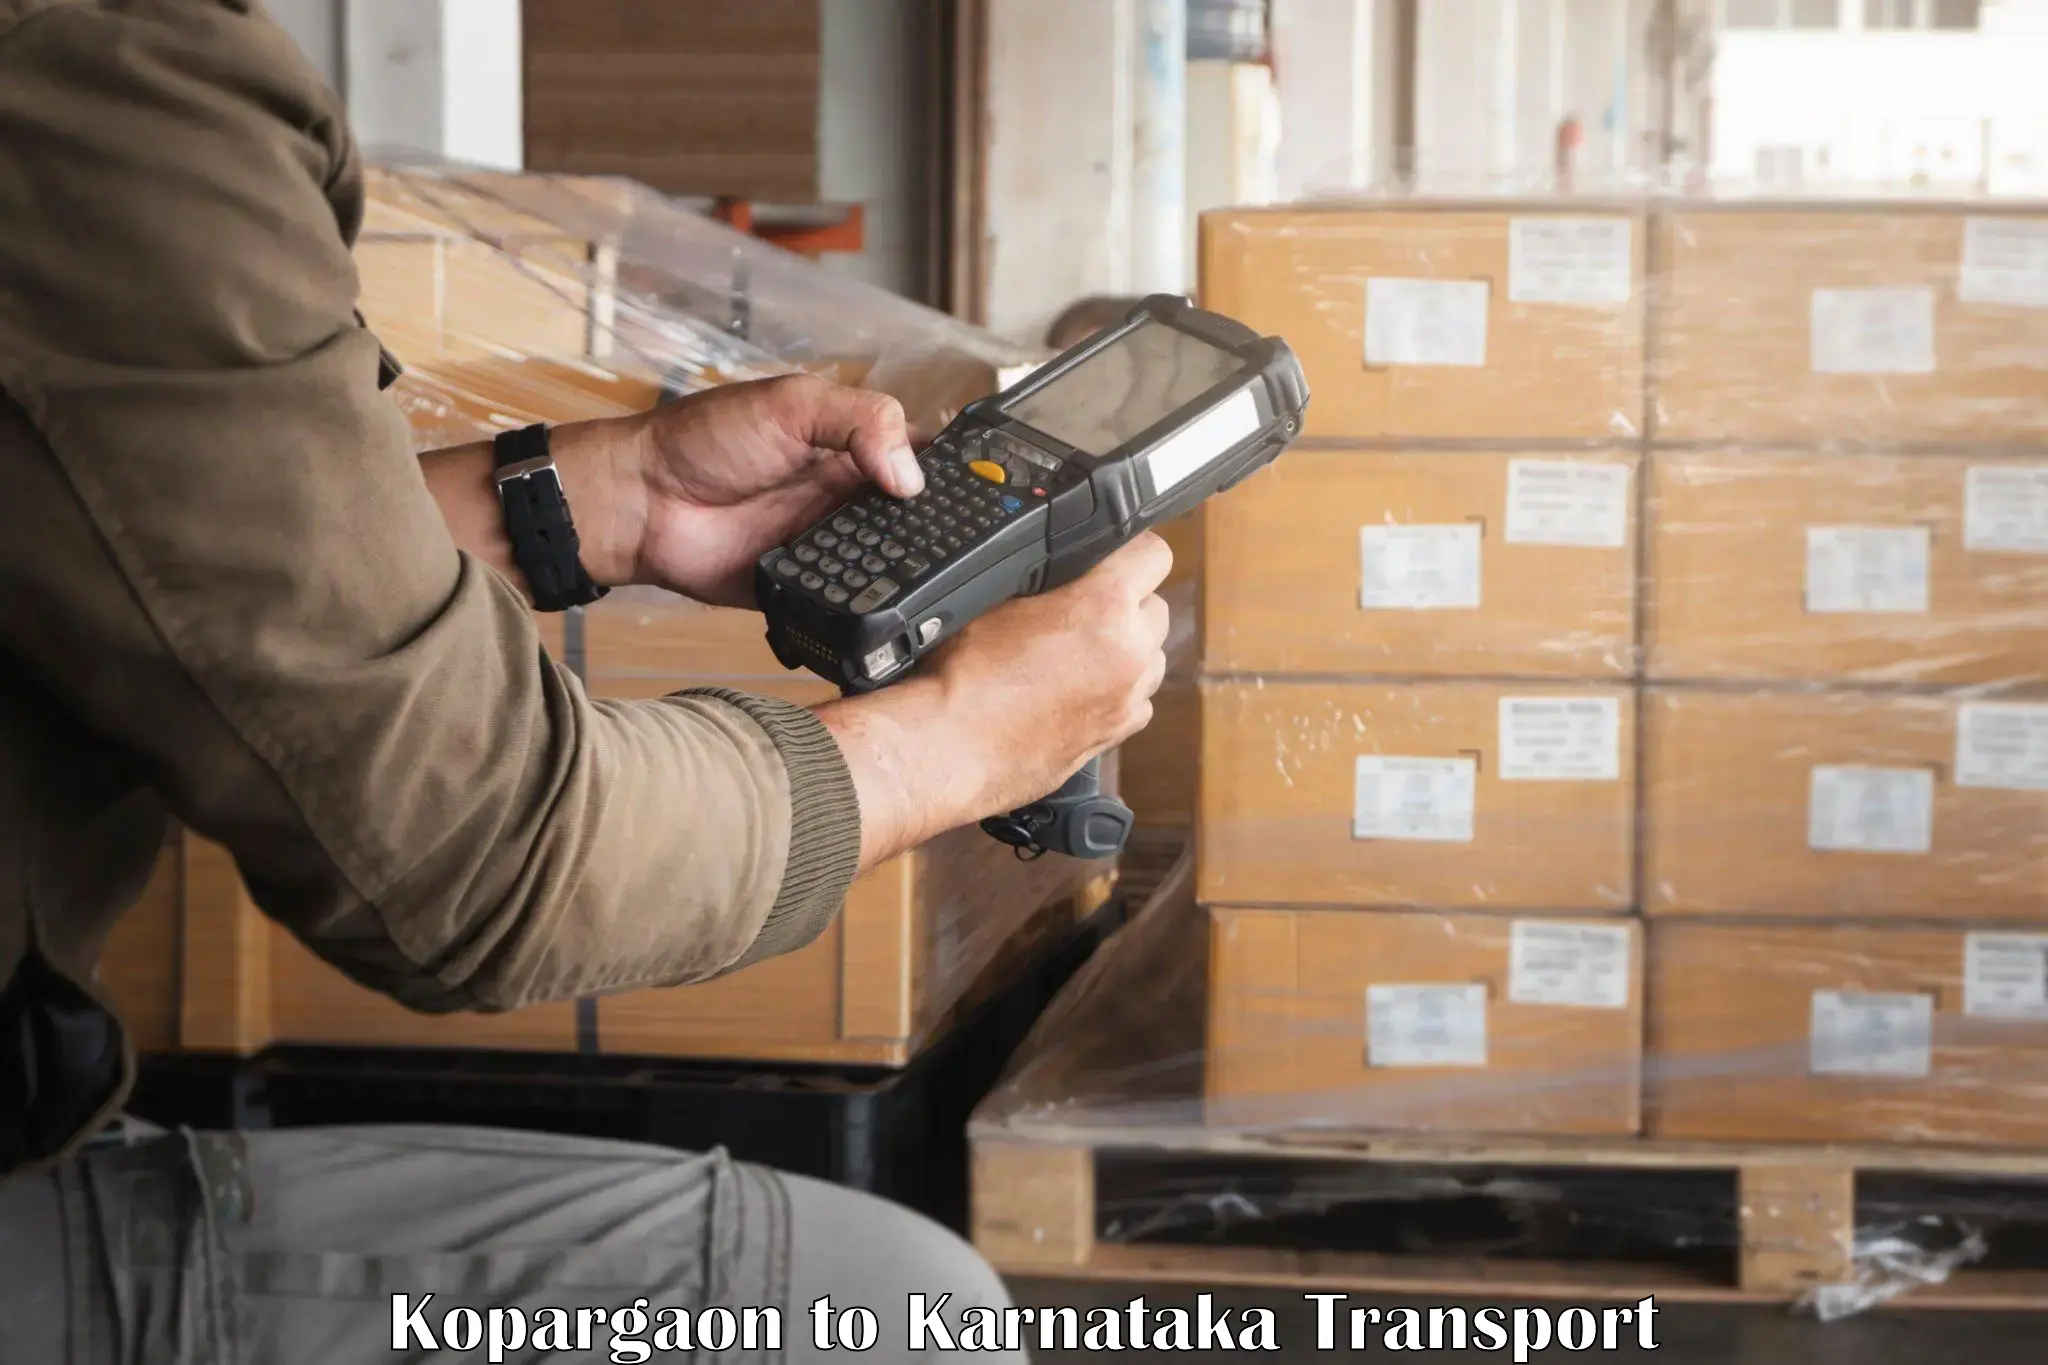 Furniture transport service Kopargaon to Gundlupete